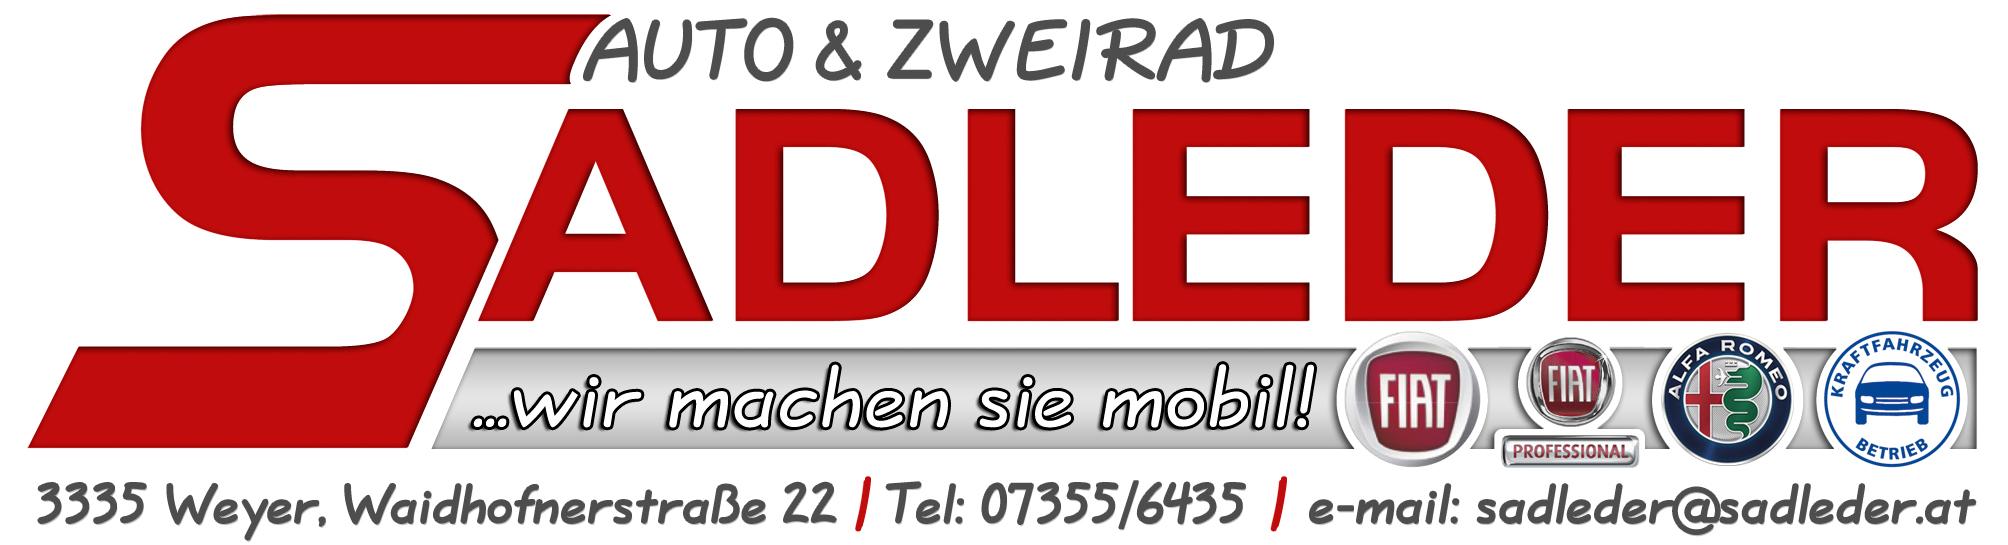 Sadleder GmbH & Co KG | Fiat